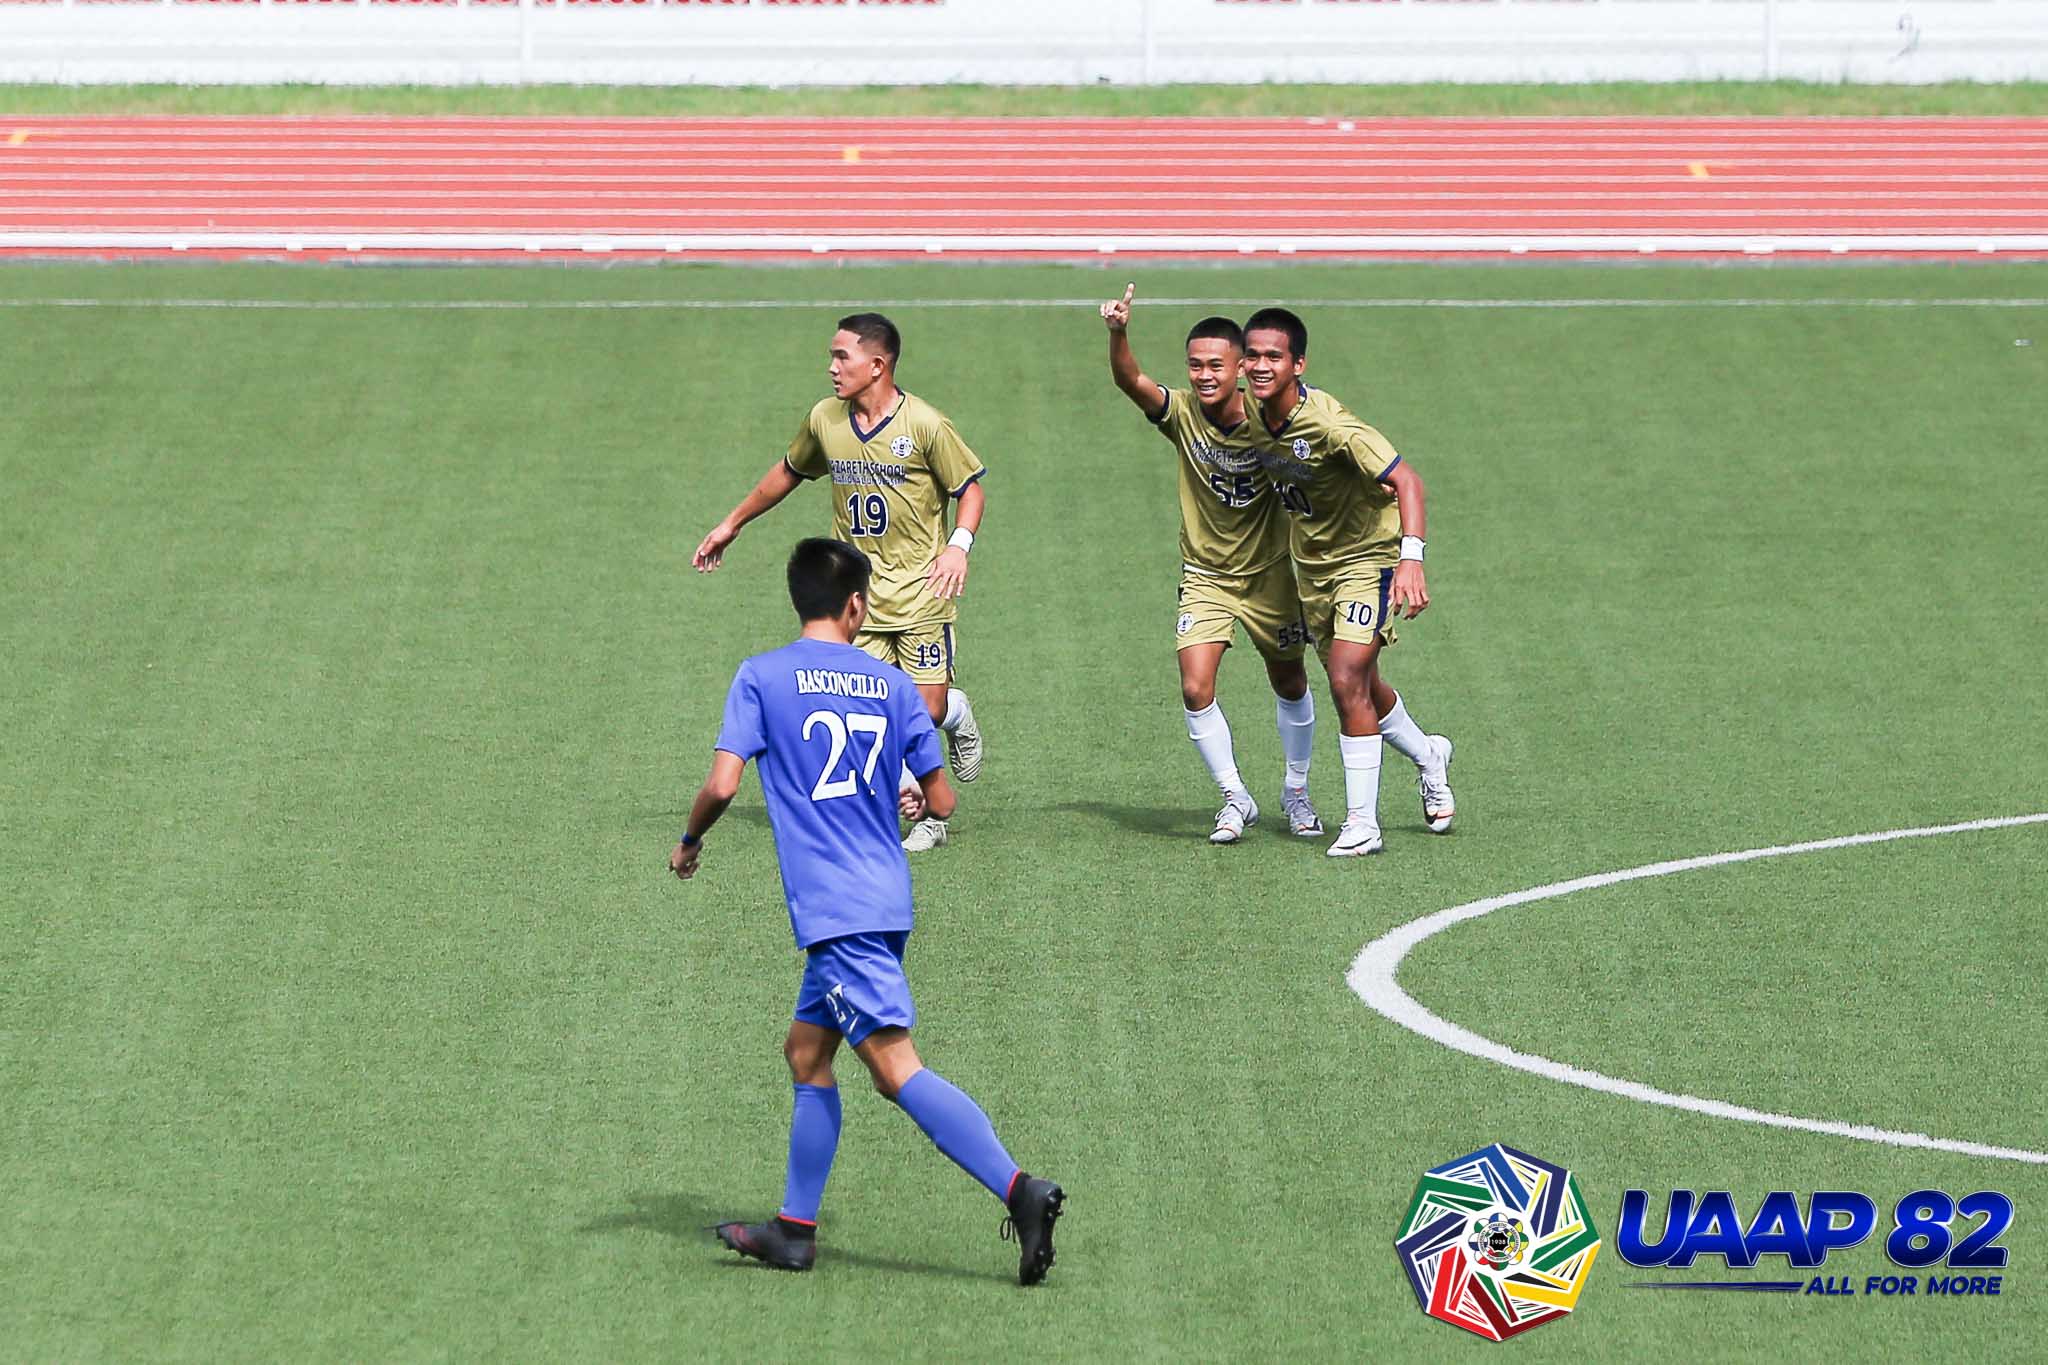 UAAP-S82-HSBFB-NU-vs-ADMU-2-NU-SALGADO-GOAL Jacob Garciano penalty saves FEU-D draw with UST in UAAP 82 Boys' Football ADMU FEU Football News NU UAAP UST  - philippine sports news